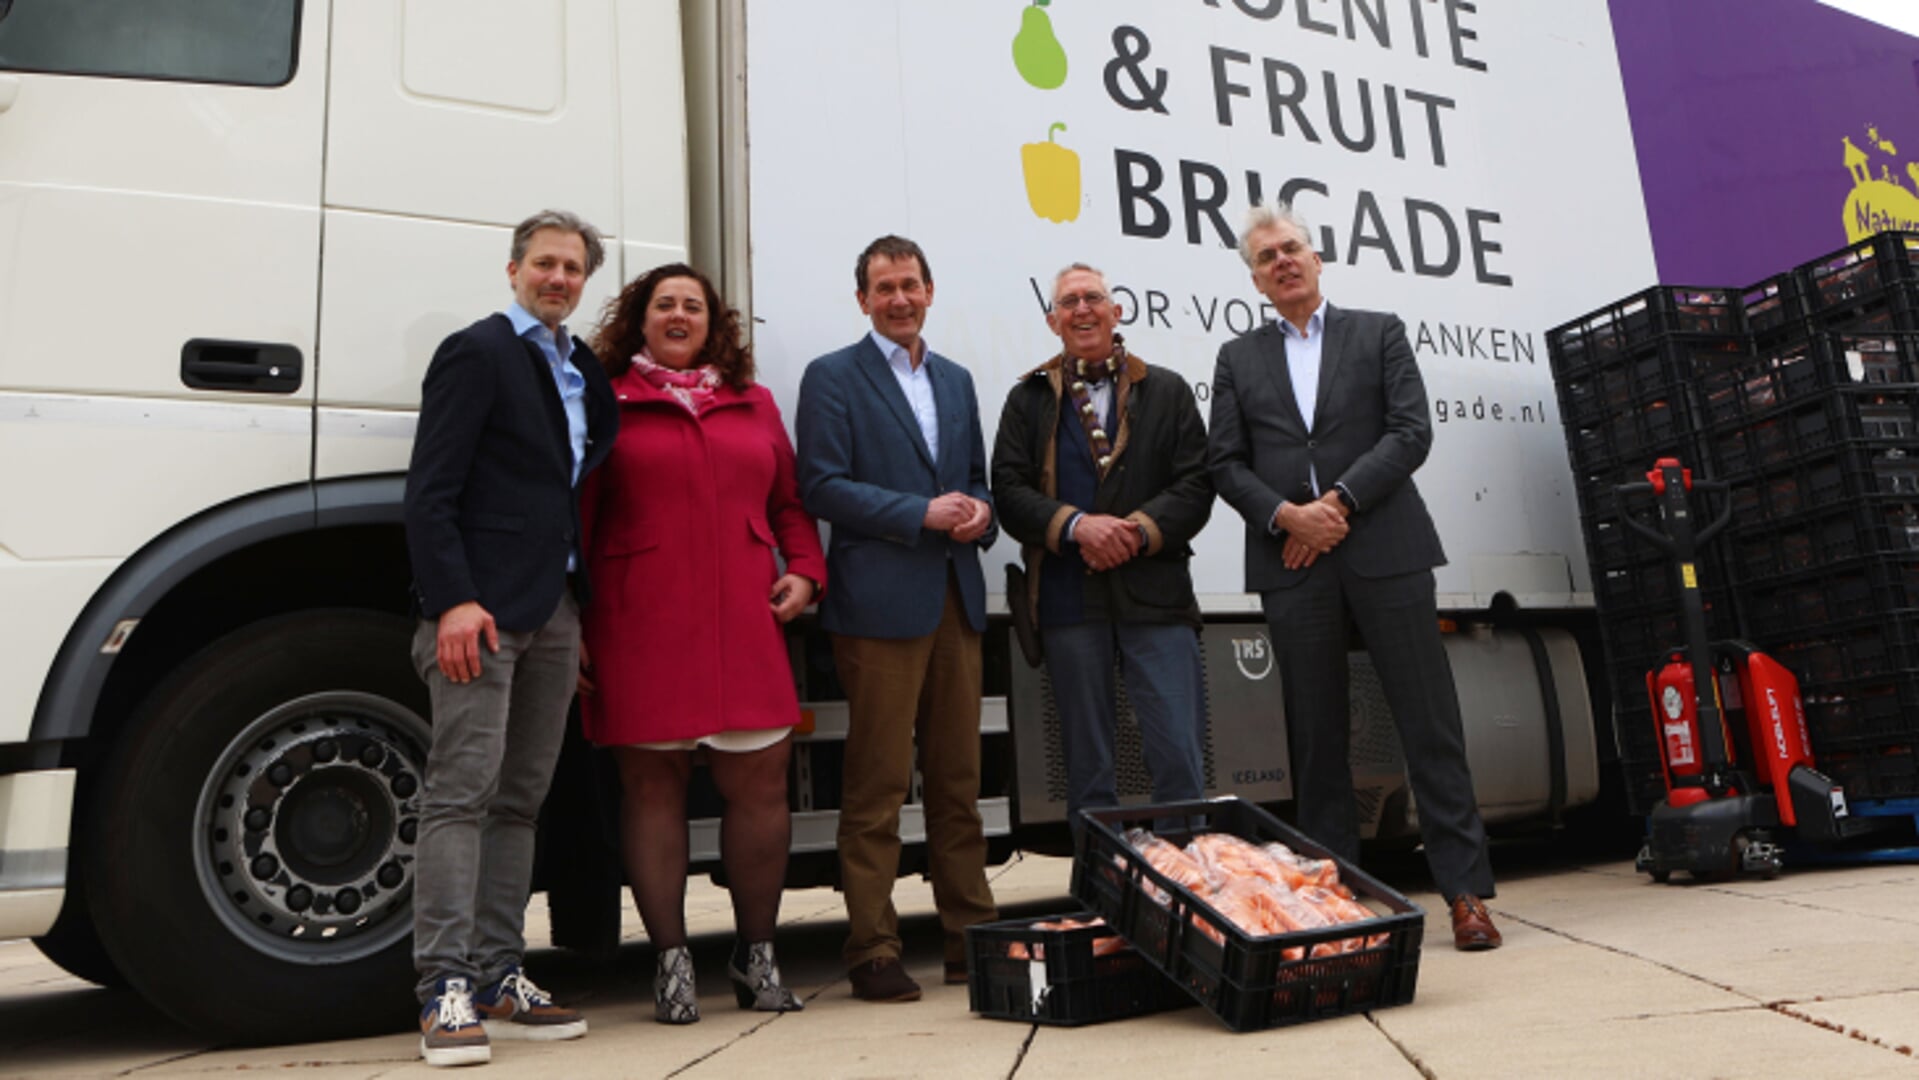 De samenwerkingsovereenkomst wordt bekrachtigd door Rob van Muilekom (gedeputeerde provincie Utrecht), Paul van Berkel (bestuurslid Voedselbanken Nederland) en Gert Mulder (voorzitter Groente & Fruitbrigade), Mary Van Hoek-Hendriks (bestuurslid Groente & Fruitbrigade) en Joost Dekkers (founder Starthubs).